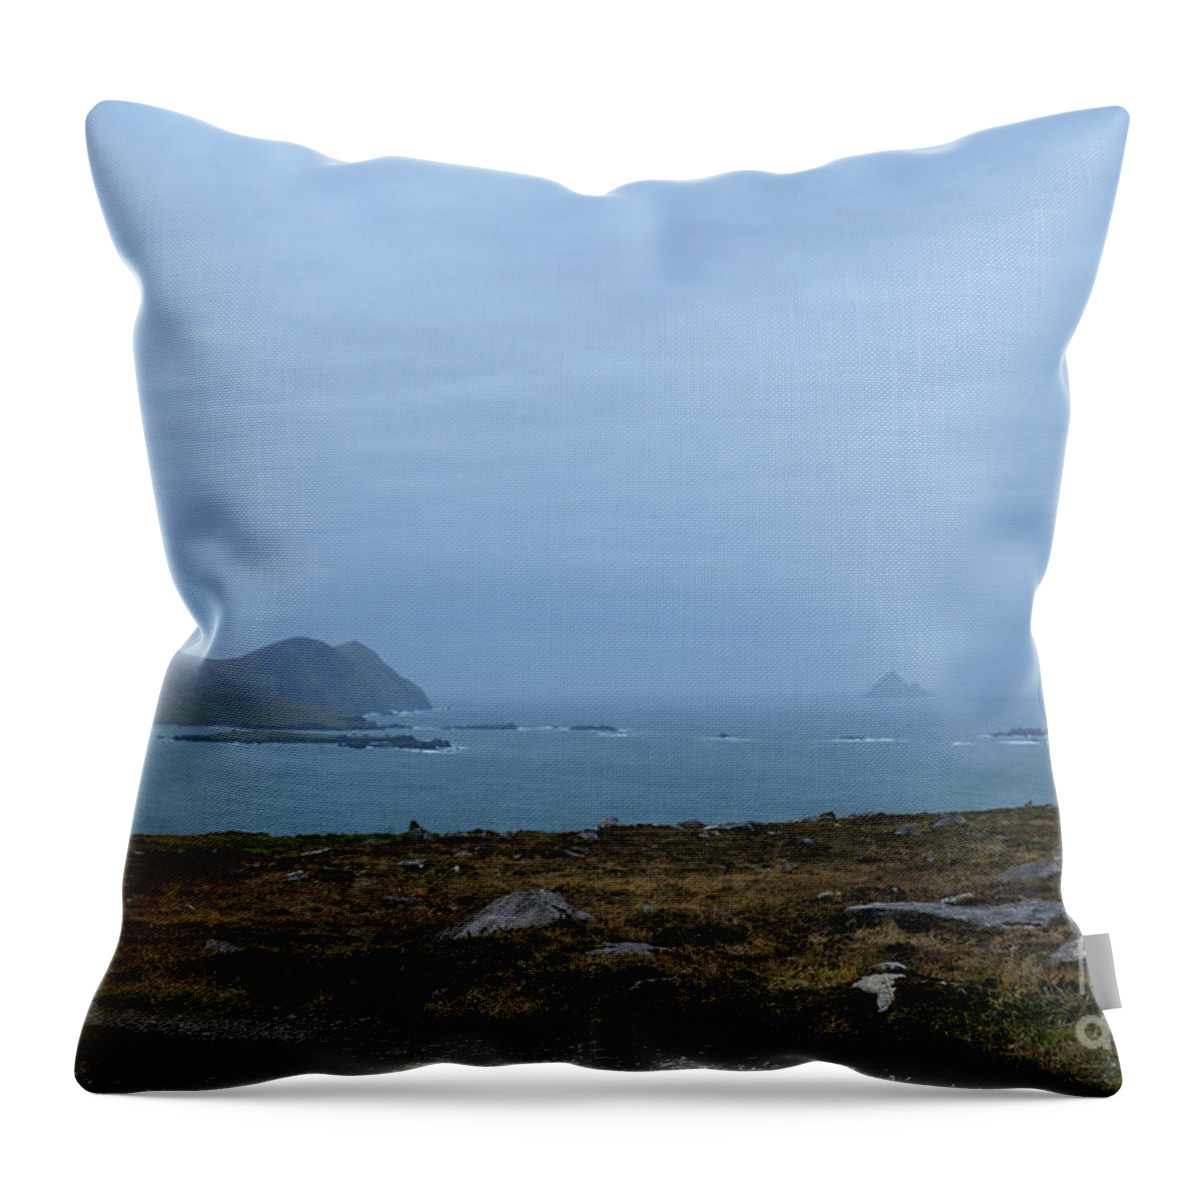 Blasket-islands Throw Pillow featuring the photograph Ireland's Blasket Islands Off the Shore of Dingle by DejaVu Designs